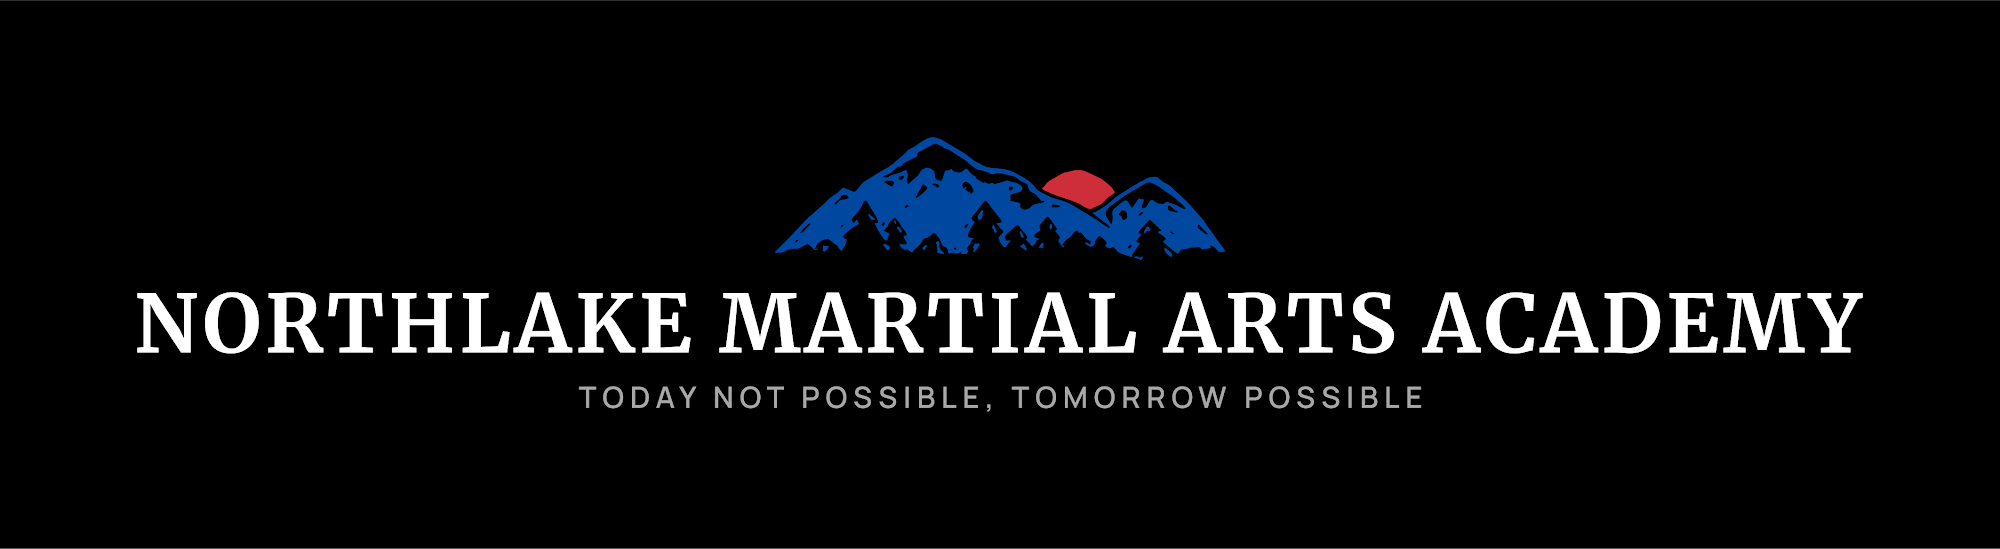 Northlake Martial Arts Academy 1236 FM 407 suite 300, Northlake Texas 76226